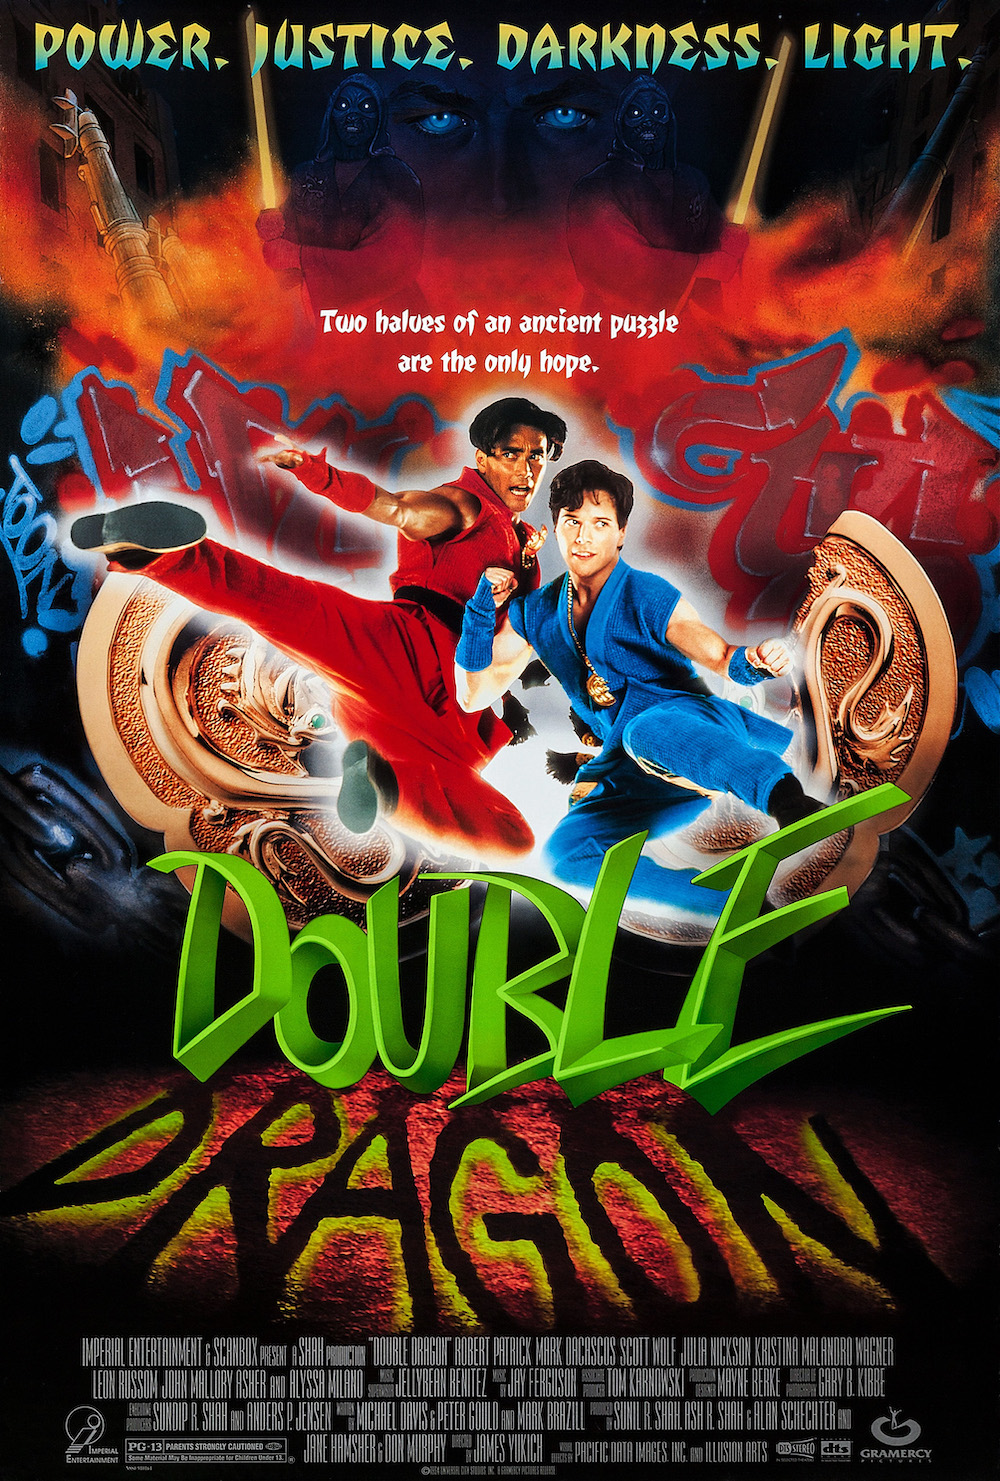 Double Dragon MVD Rewind Collection